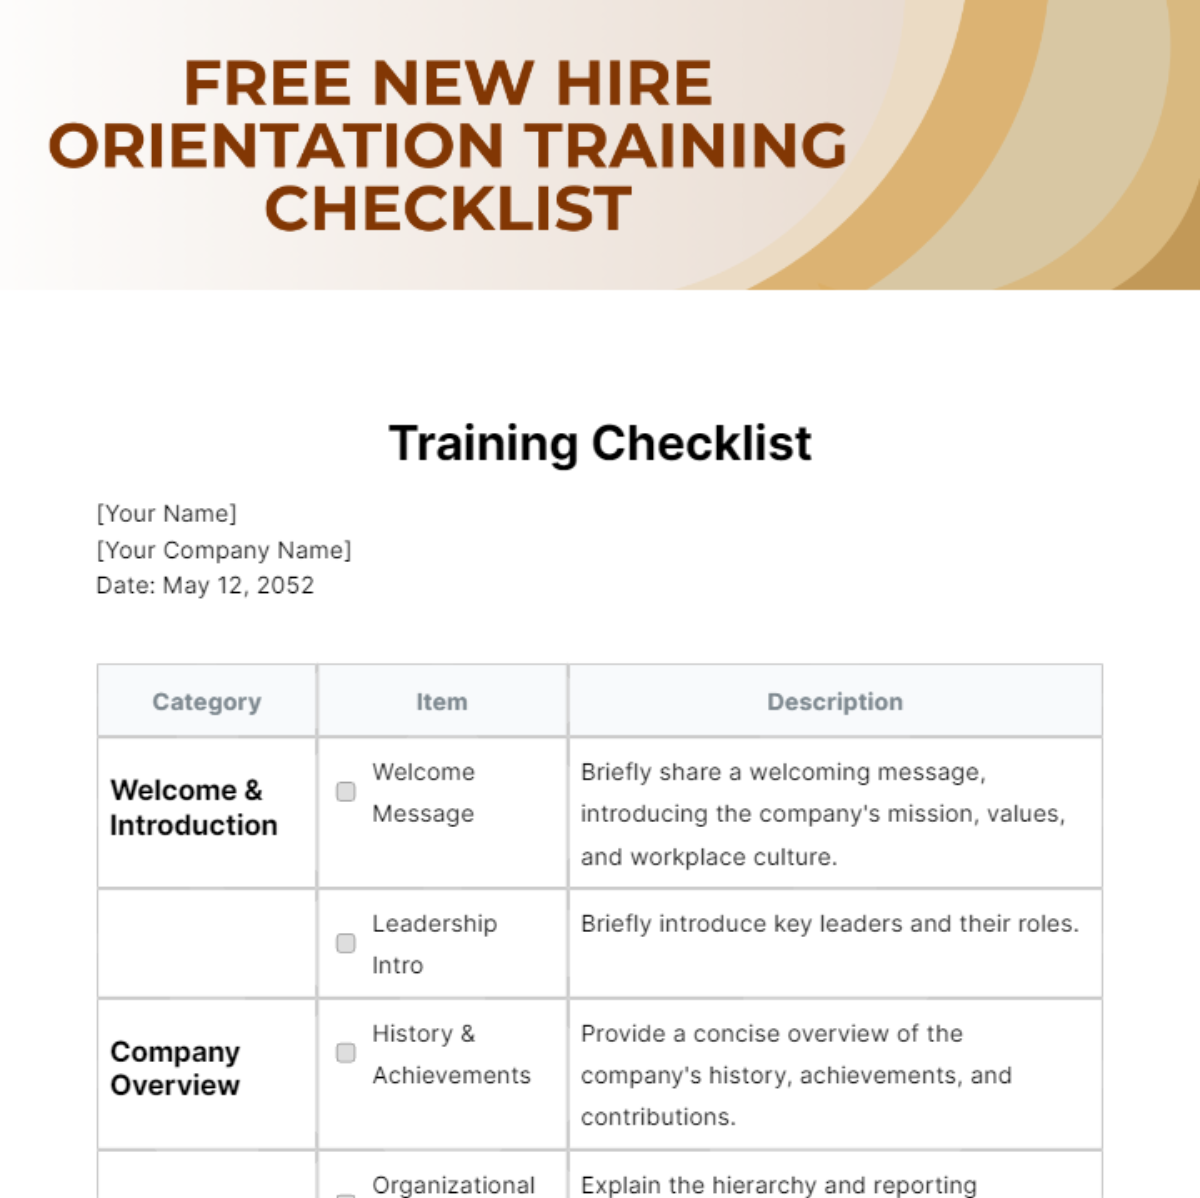 Free New Hire Orientation Training Checklist Template